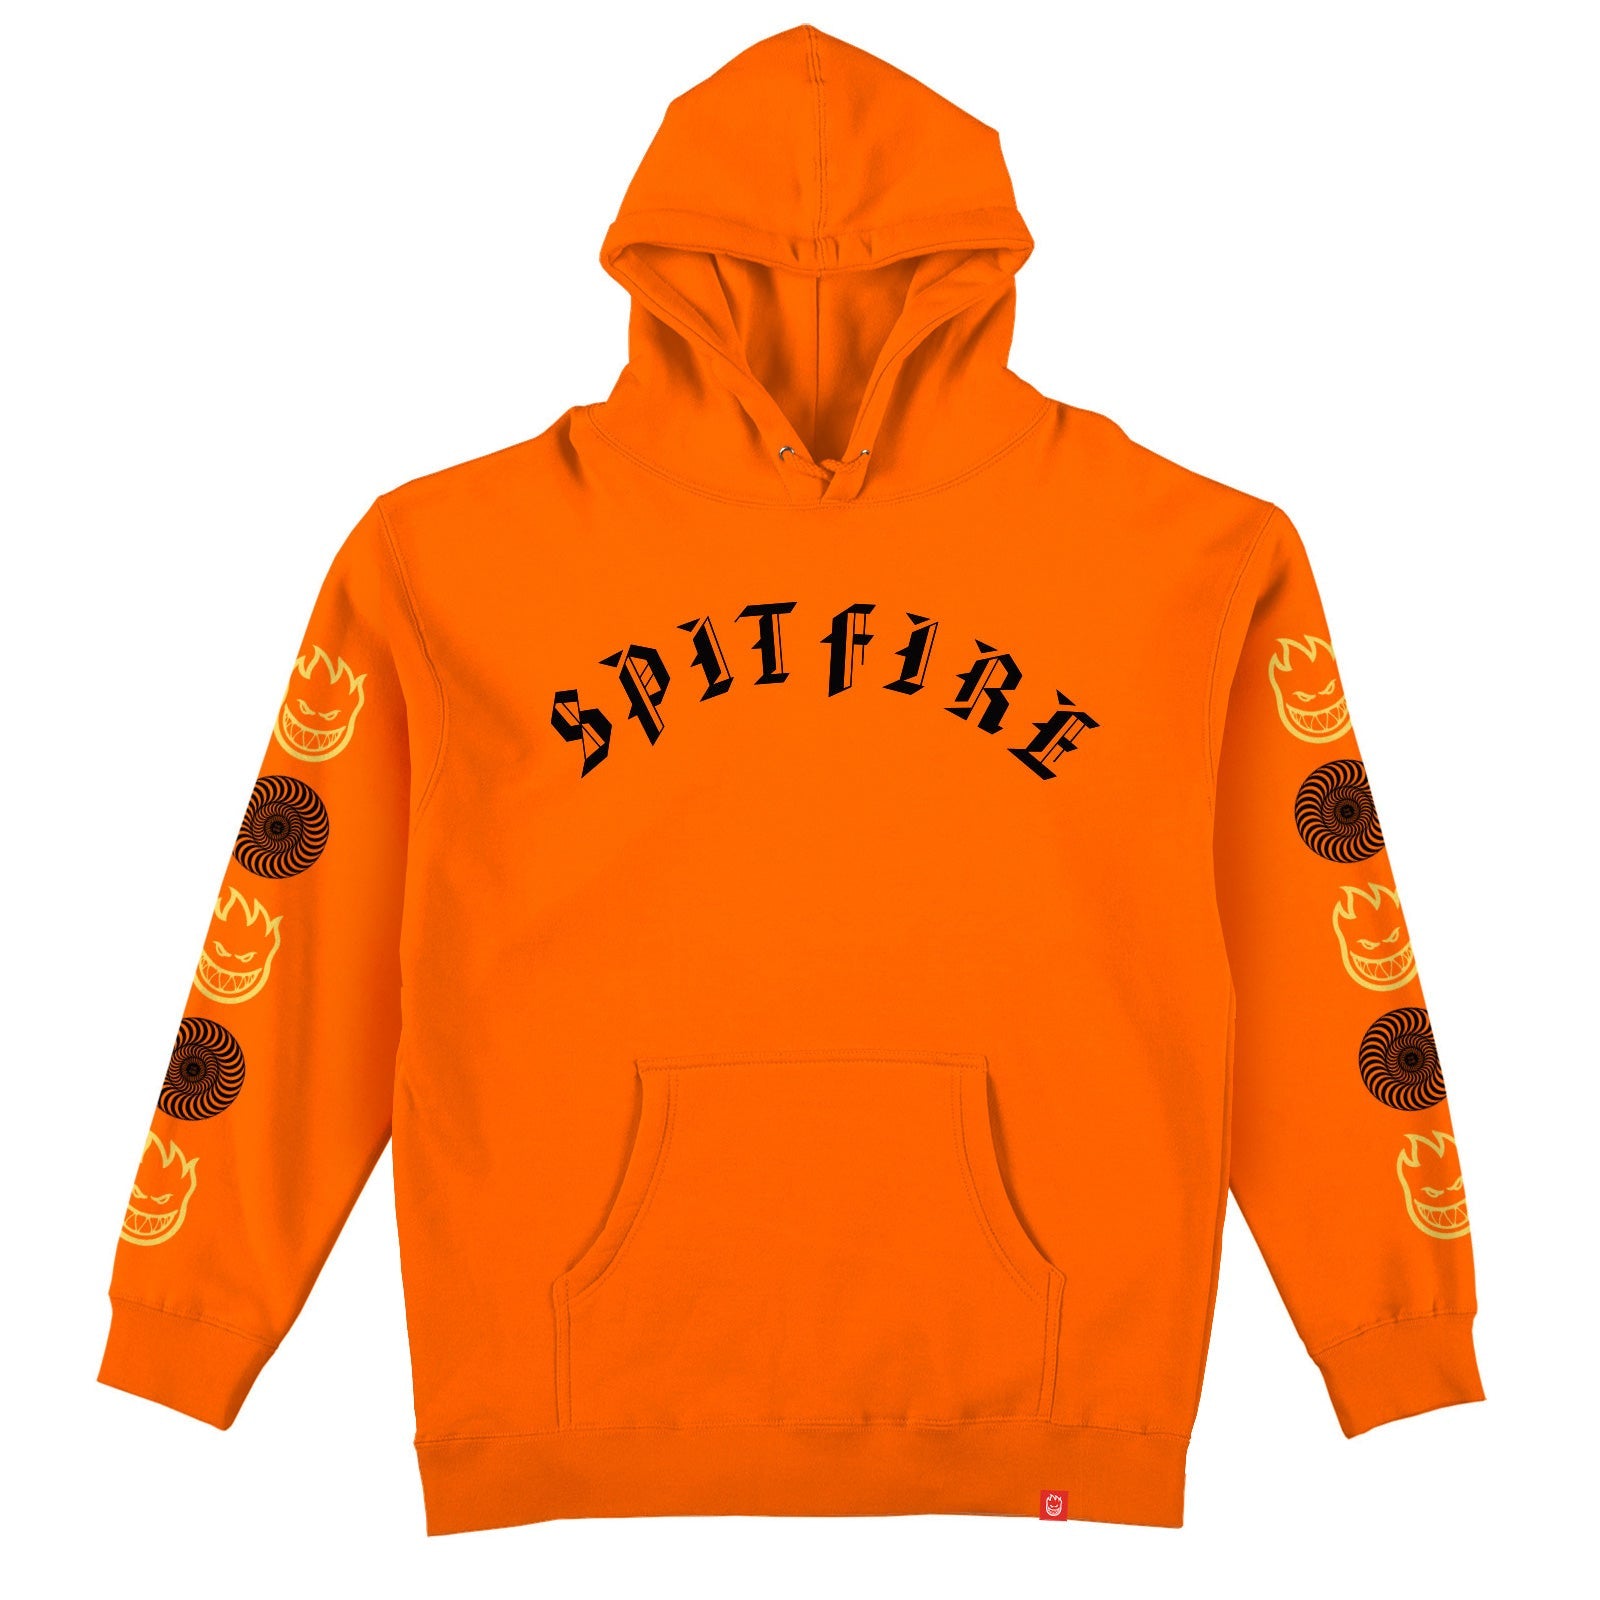 Spitfire Old E Combo Sleeve Hoodie- Premium Print, safety orange w/ black & yellow prints - Tiki Room Skateboards - 1